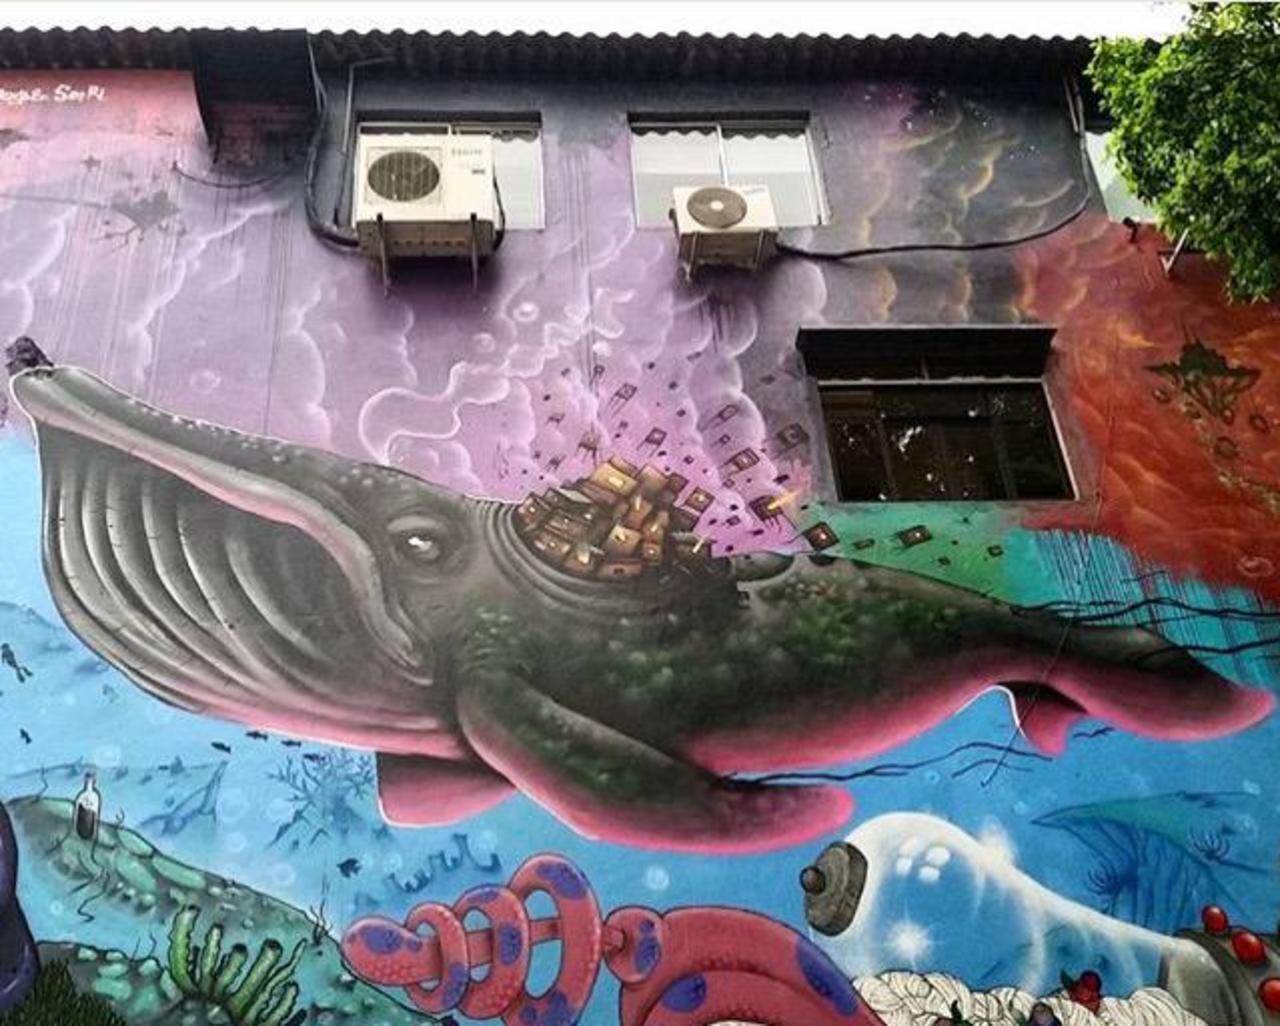 Street Art by joks_johnes Pinheiros, São Paulo 

#art #mural #graffiti #streetart http://t.co/nWB1dXW3S3